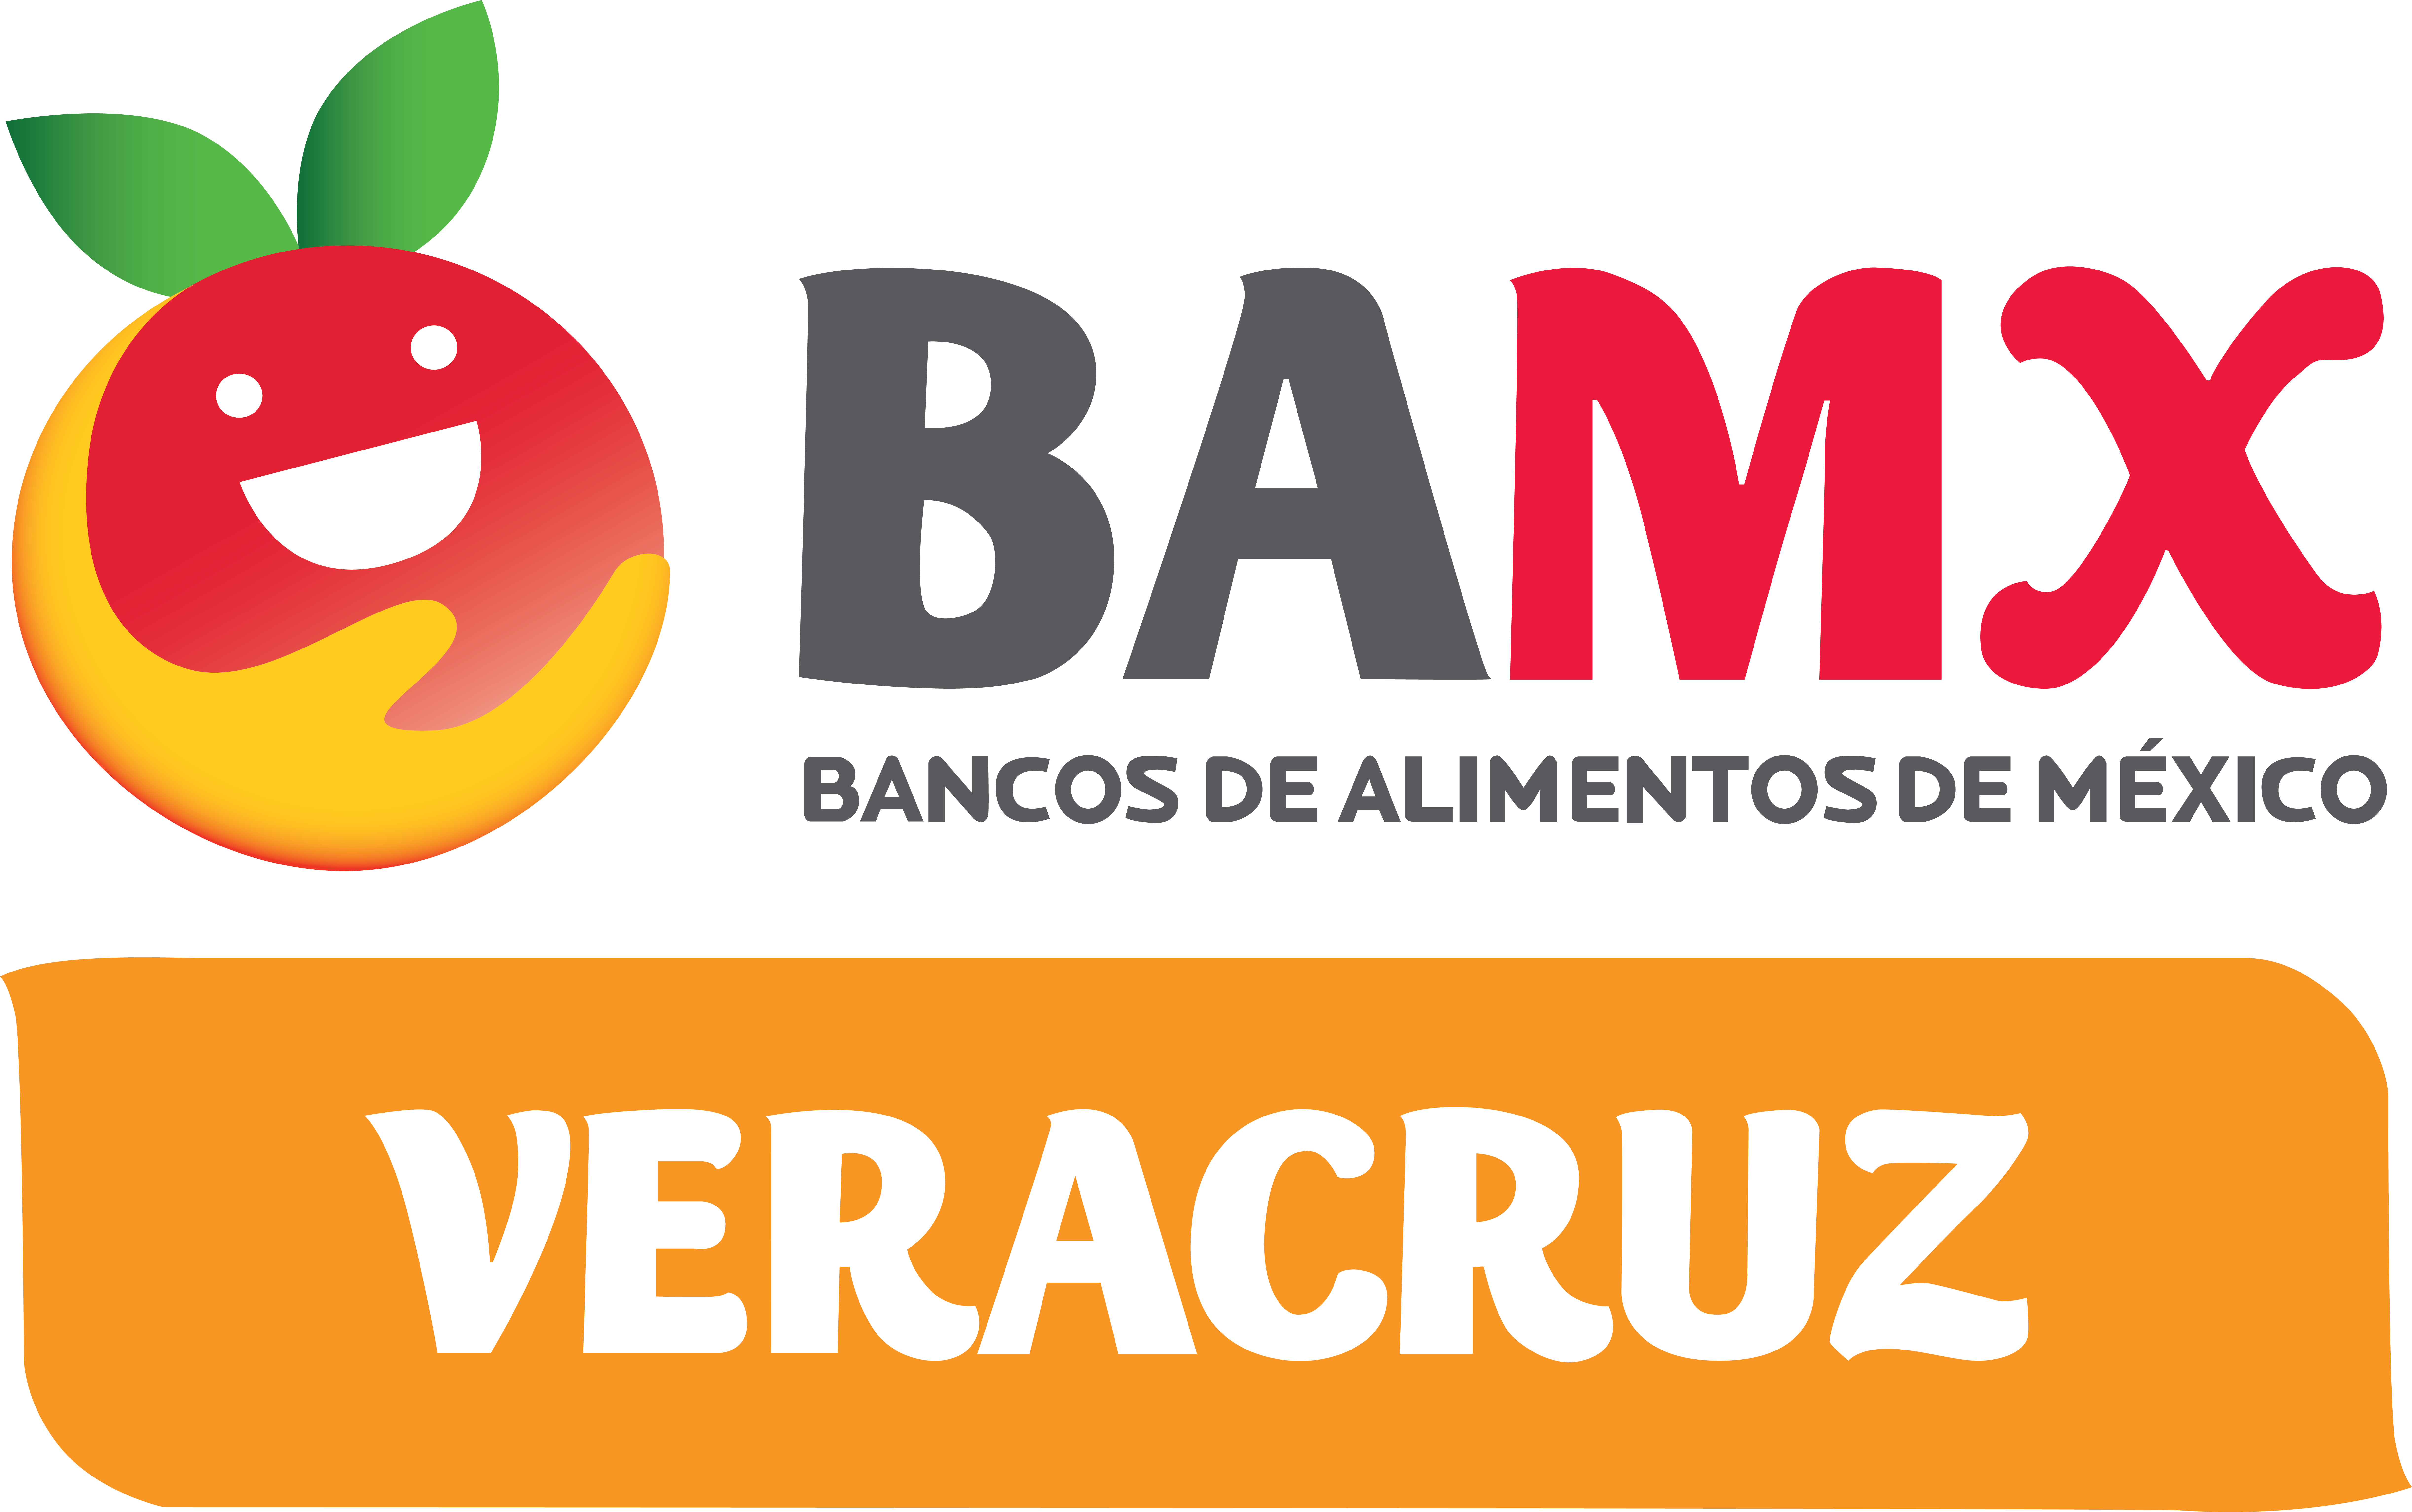 BAV: Banco de Alimentos de Veracruz